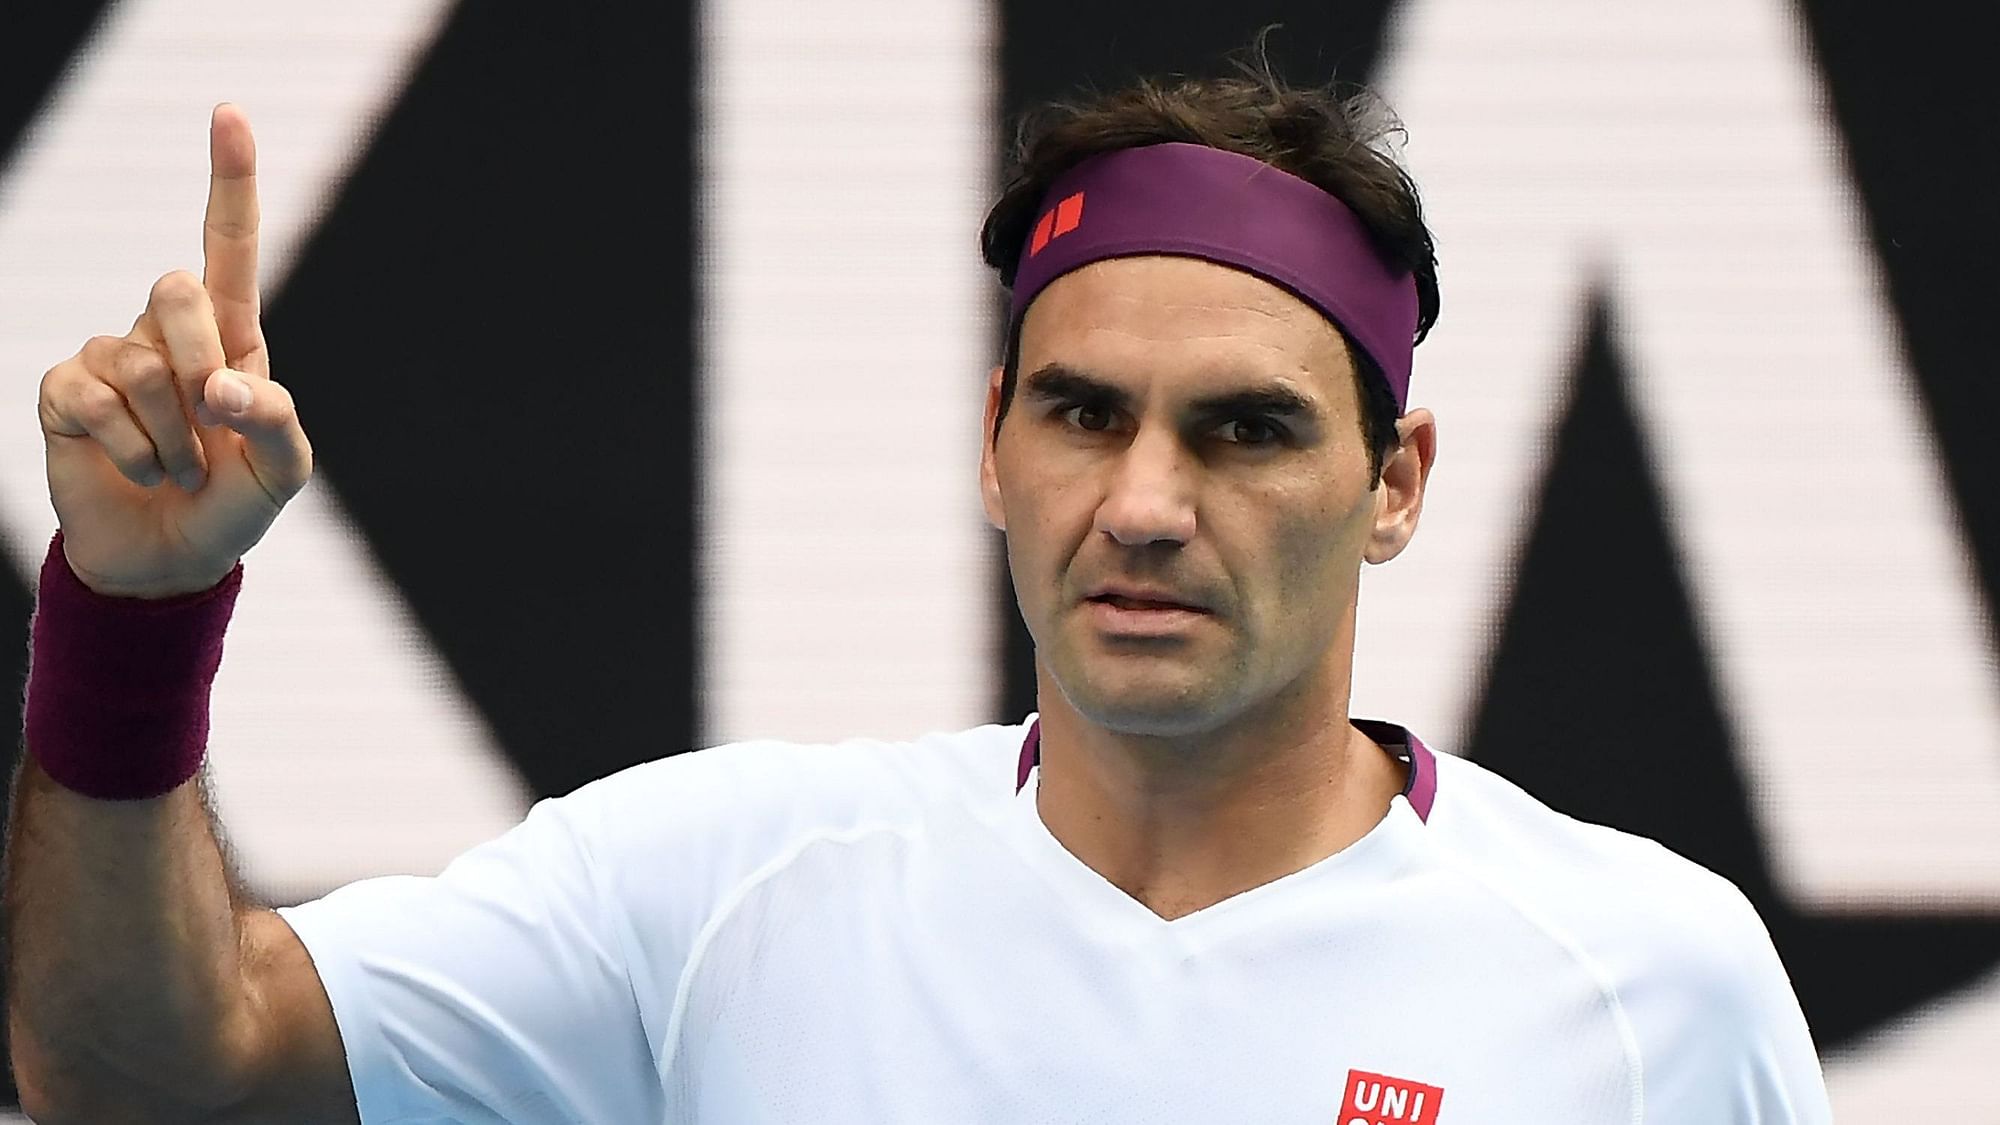 The 38-year-old Roger Federer lost 7-6(1), 6-4, 6-3 to Novak Djokovic in the Australian Open semi-final on Thursday, 30 January.